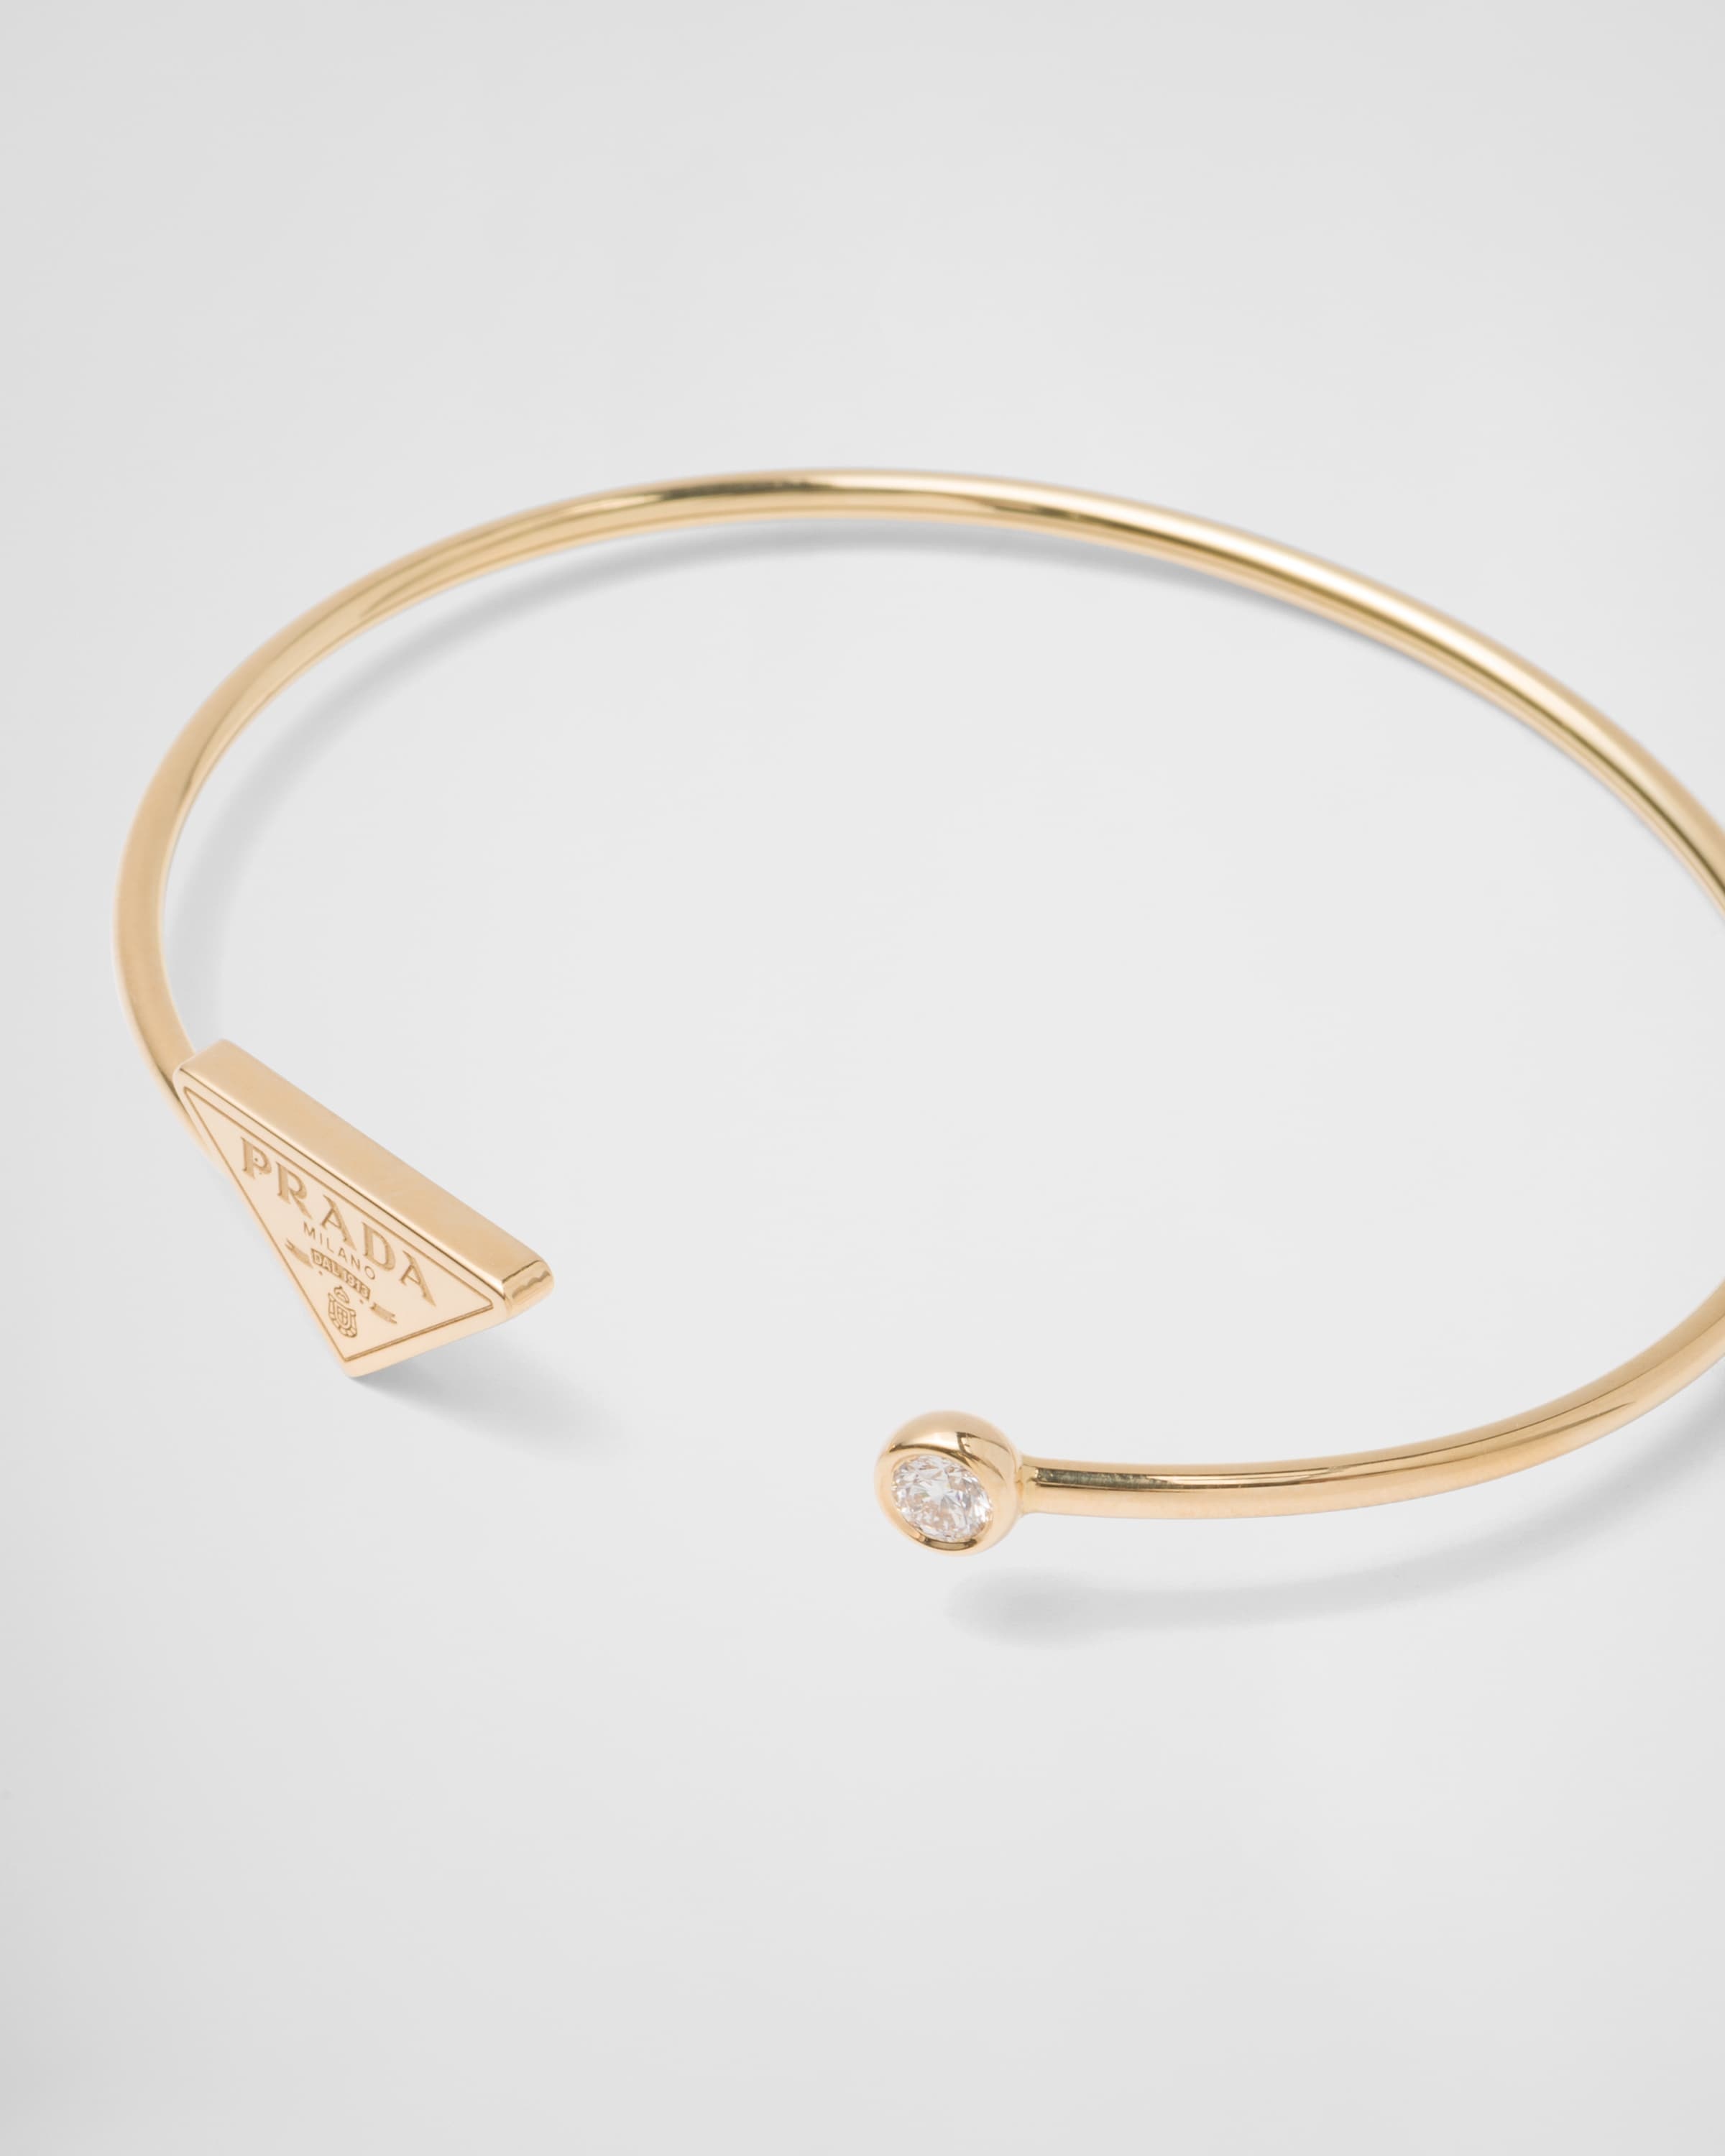 Prada Eternal Gold bangle bracelet in yellow gold with diamond